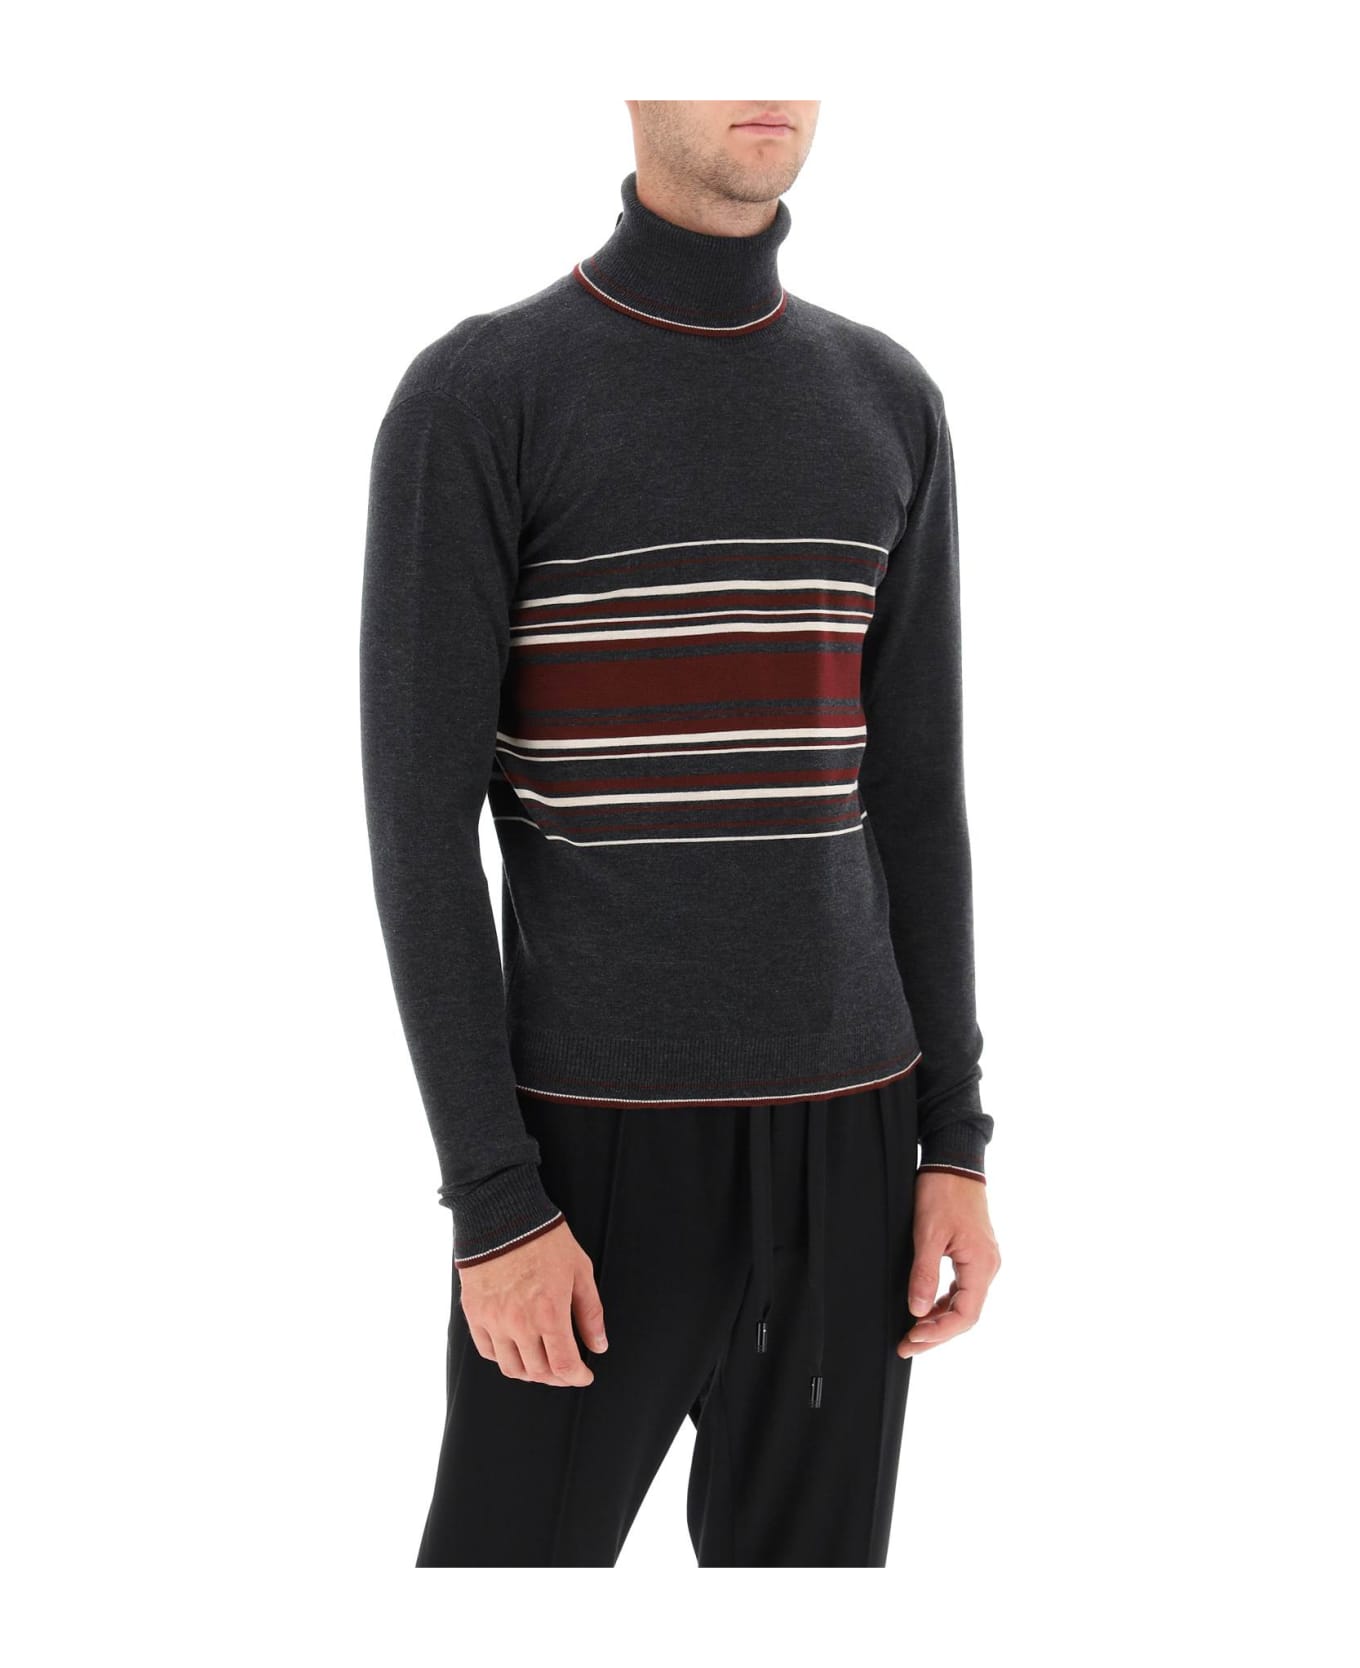 Dolce & Gabbana Striped Turtleneck Sweater - Variante Abbinata